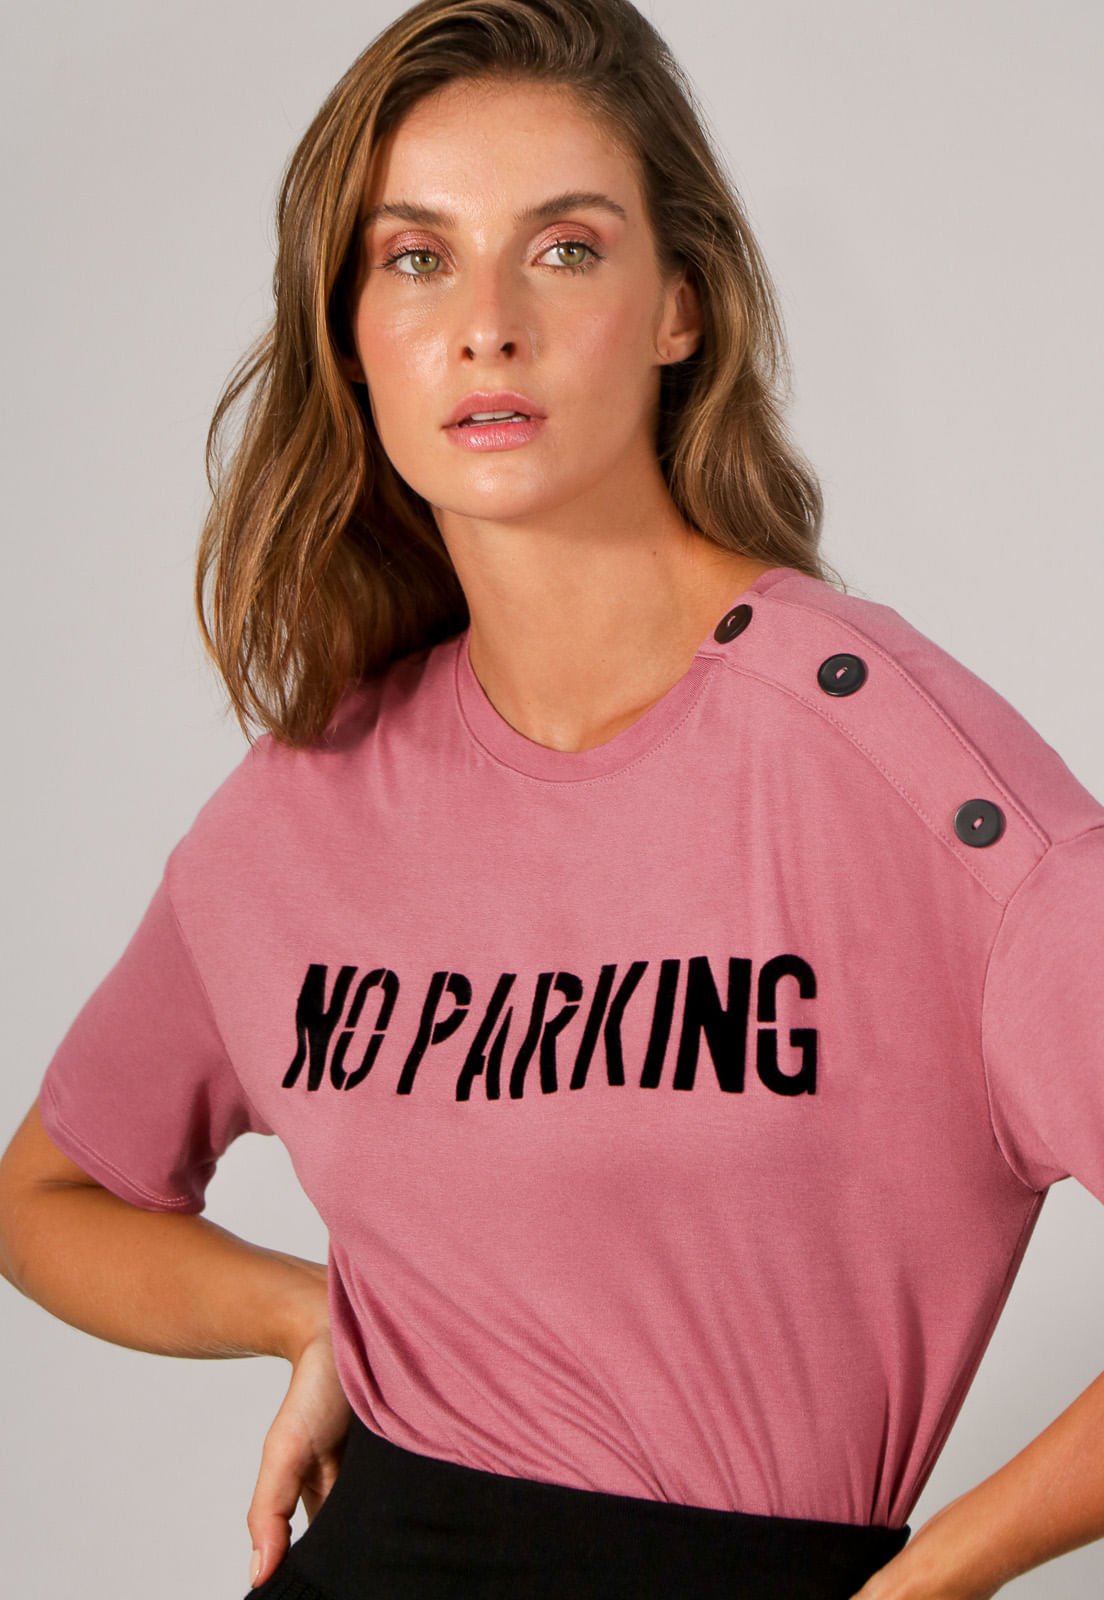 T-shirt Rosa Escuro No Parking